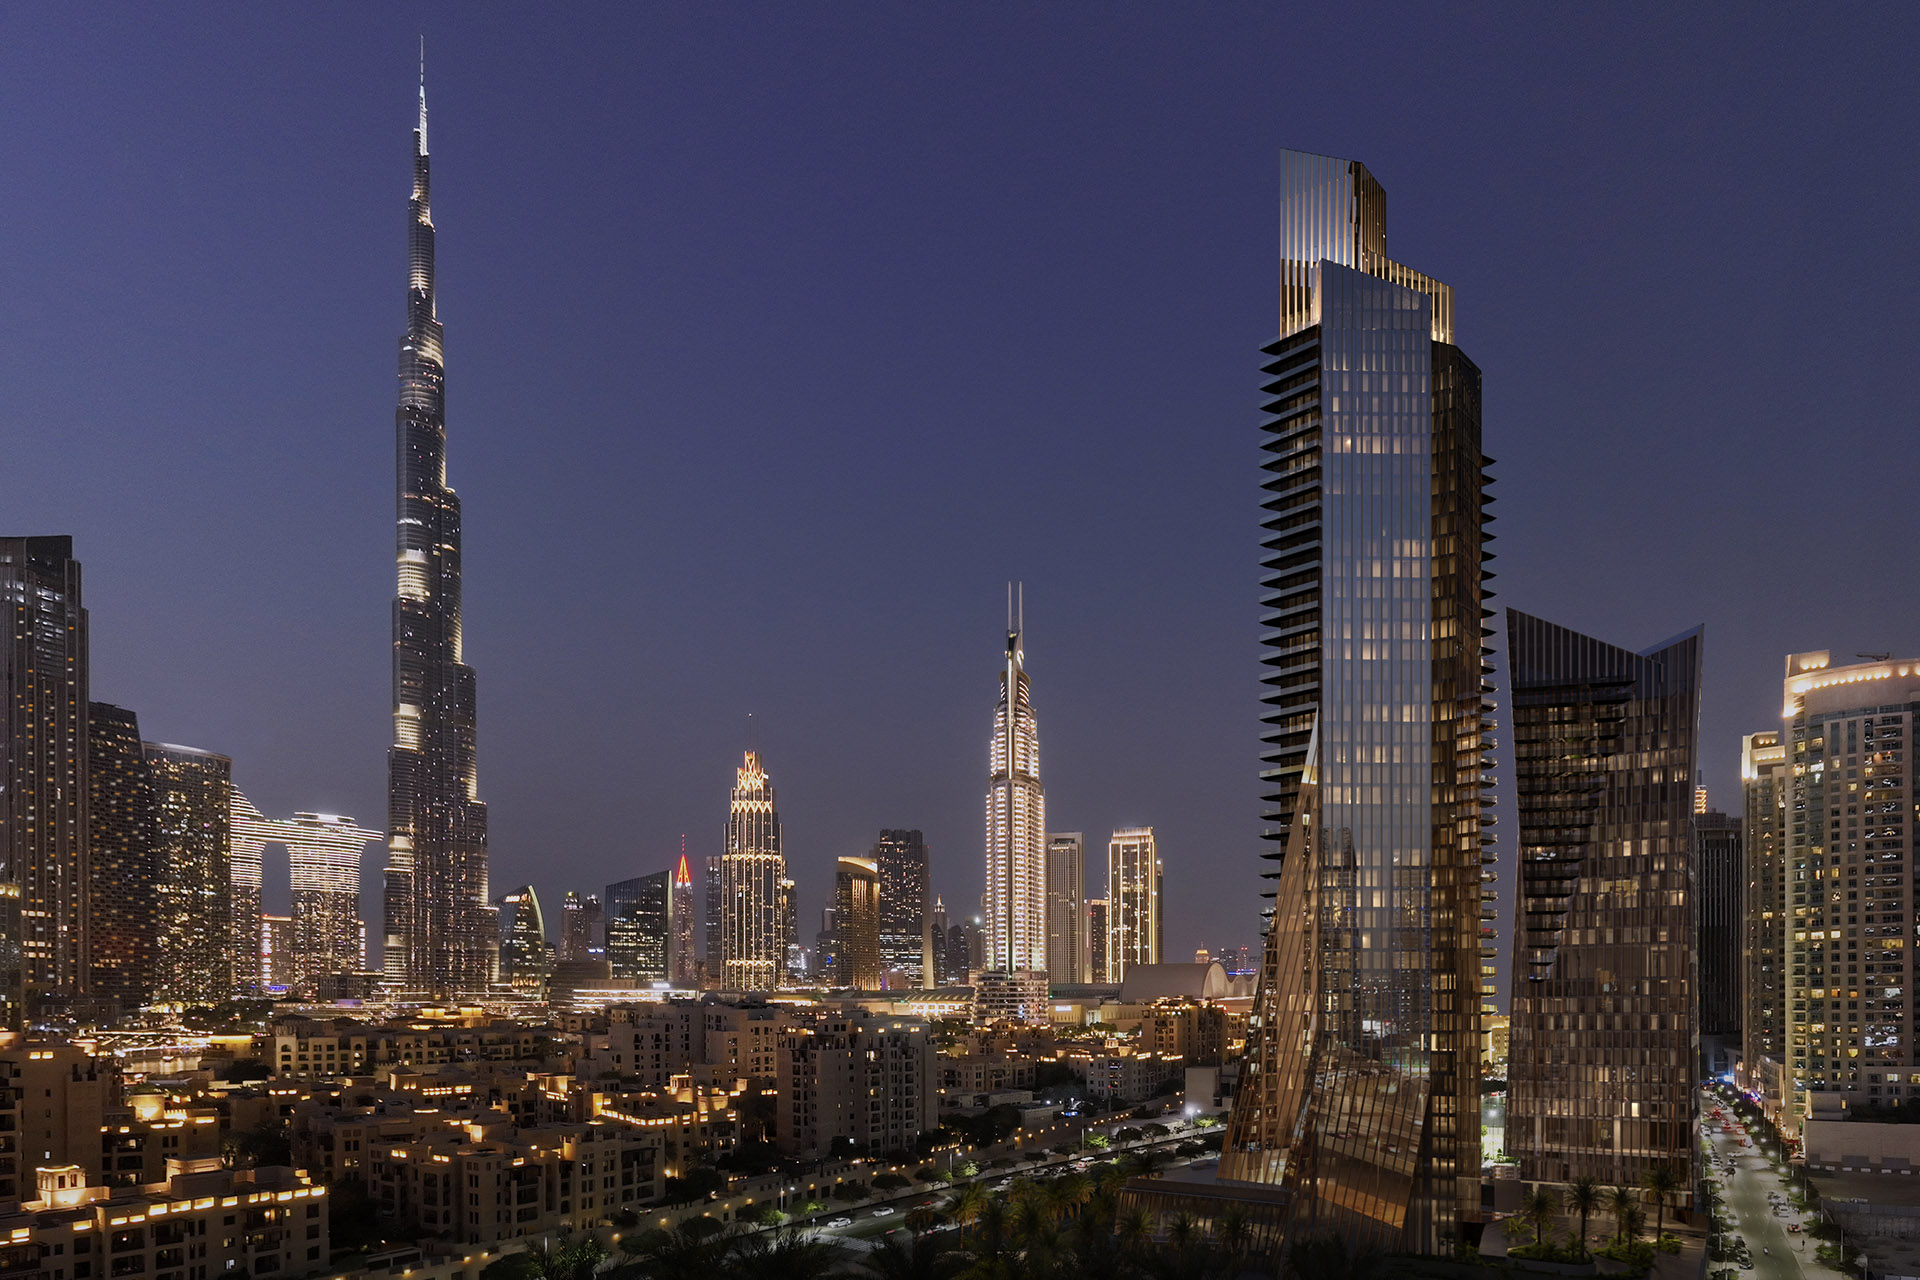 Dubai Apartments for Sale